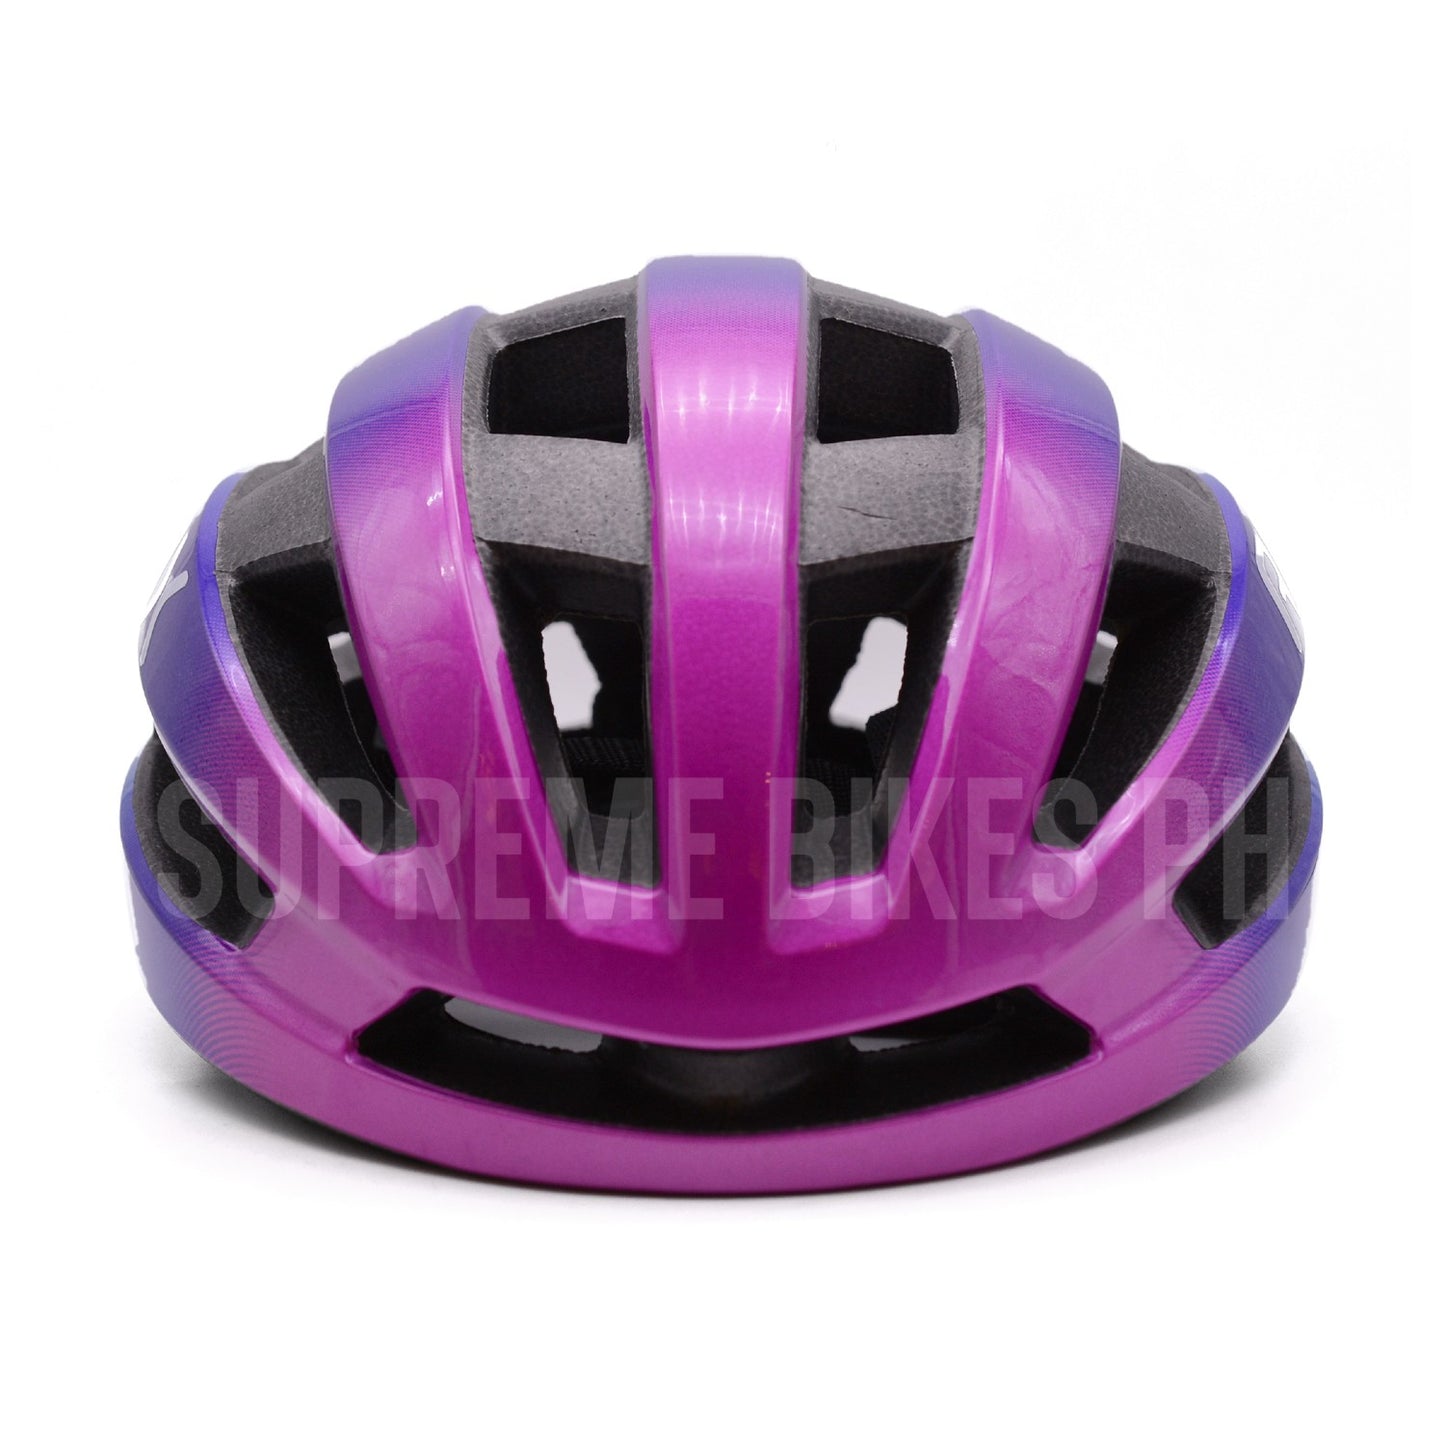 RNOX Bike Helmet Universal Size 53-61cm - Oil Slick